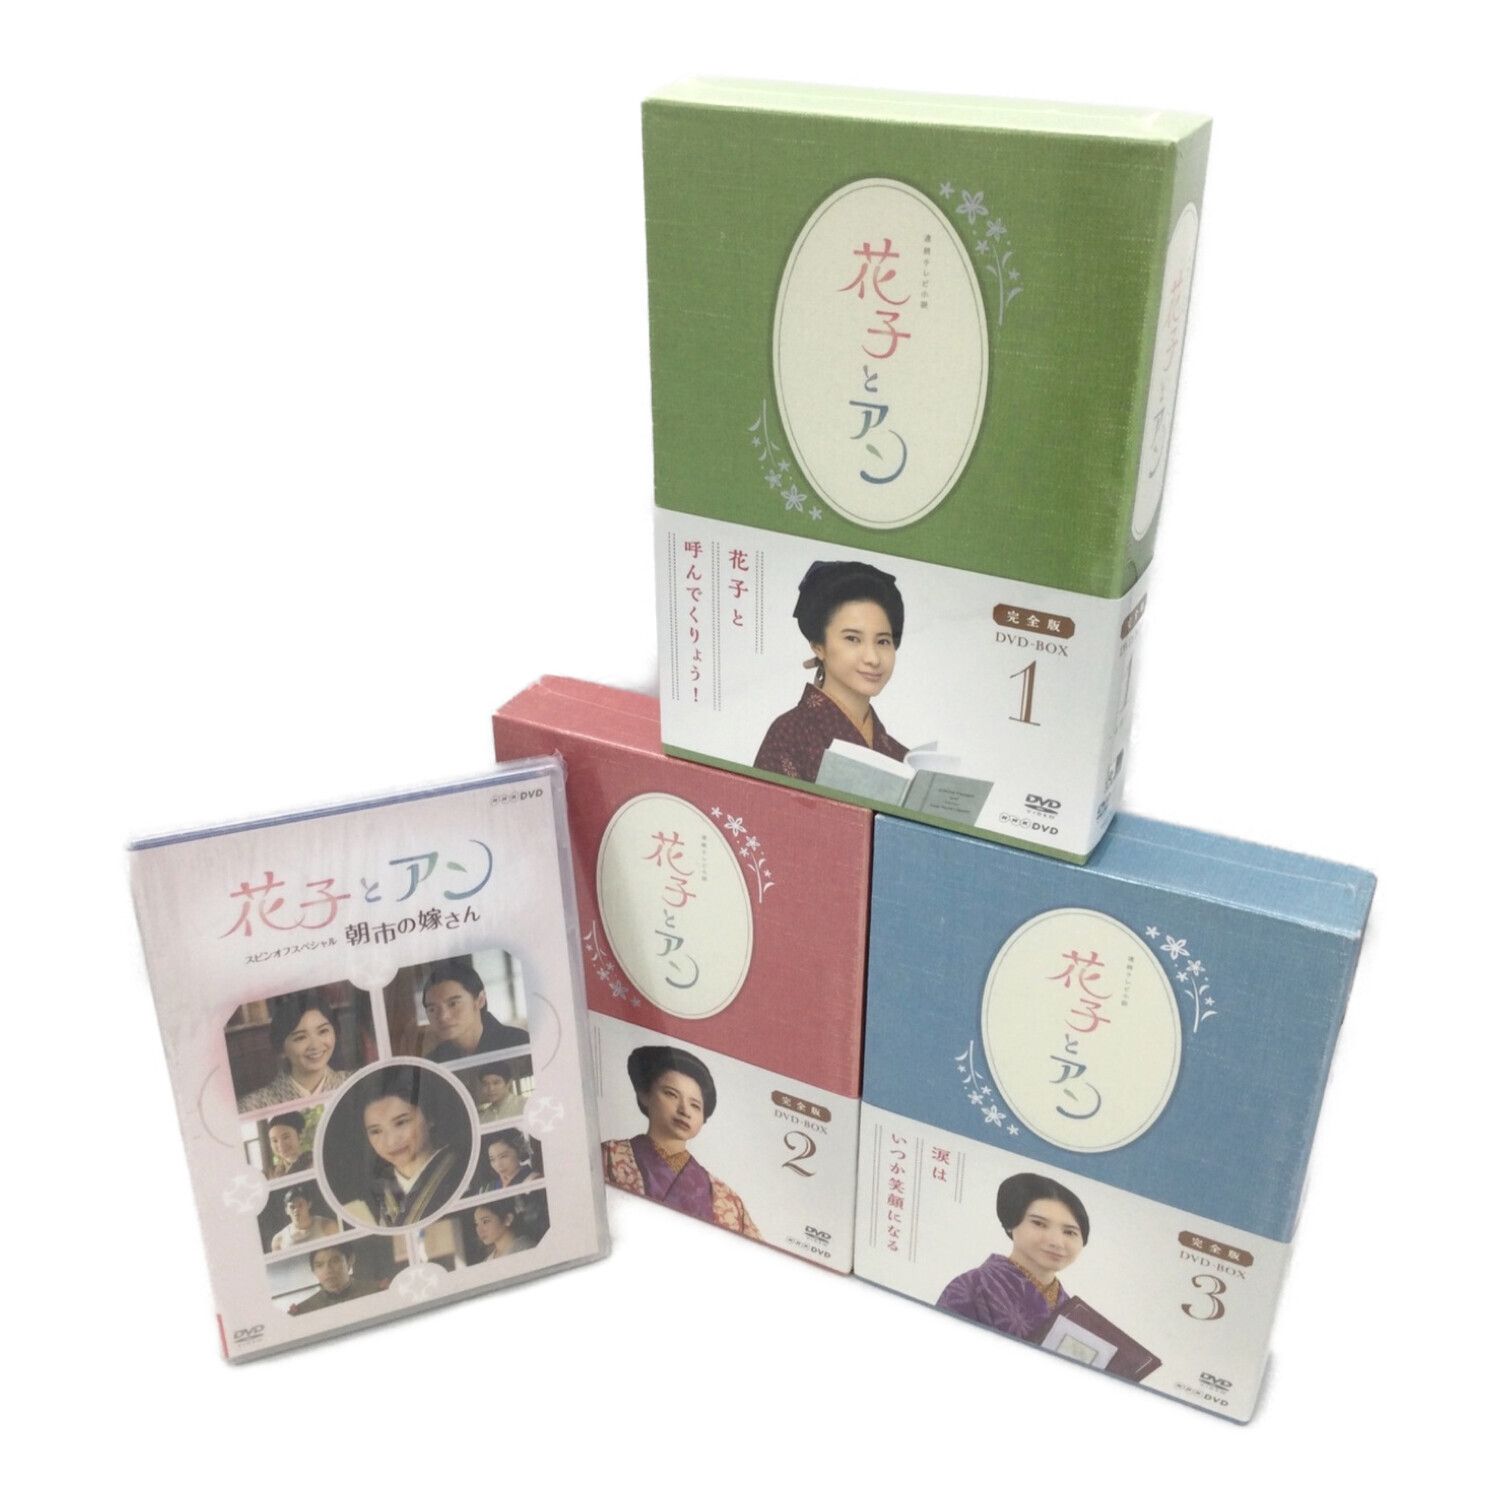 NHK 連続テレビ小説 花子とアン 完全版 DVD BOX 全3巻セット+